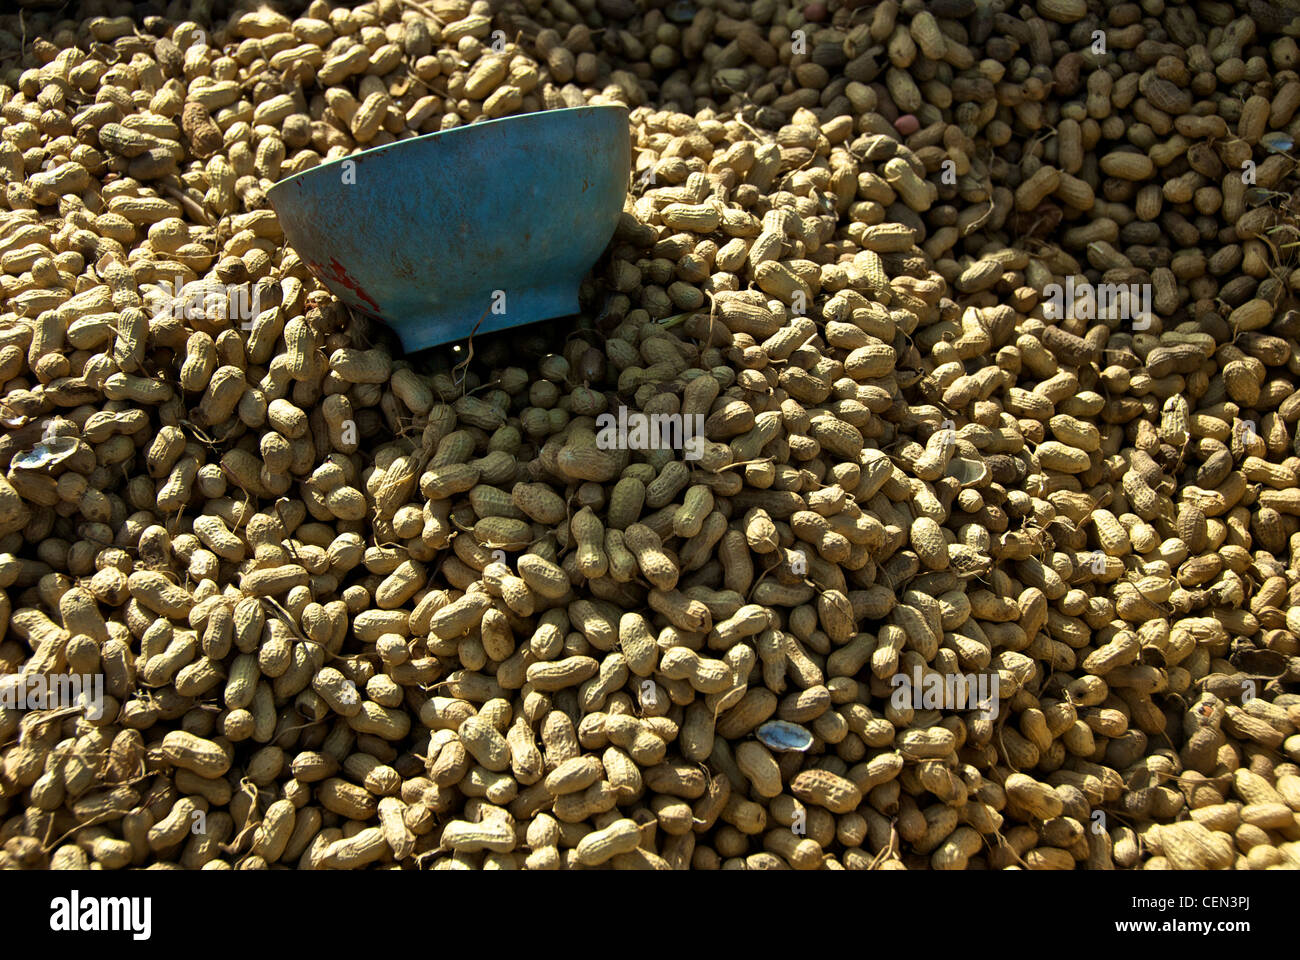 Peanuts at a market in Mopti, Mali. Stock Photo